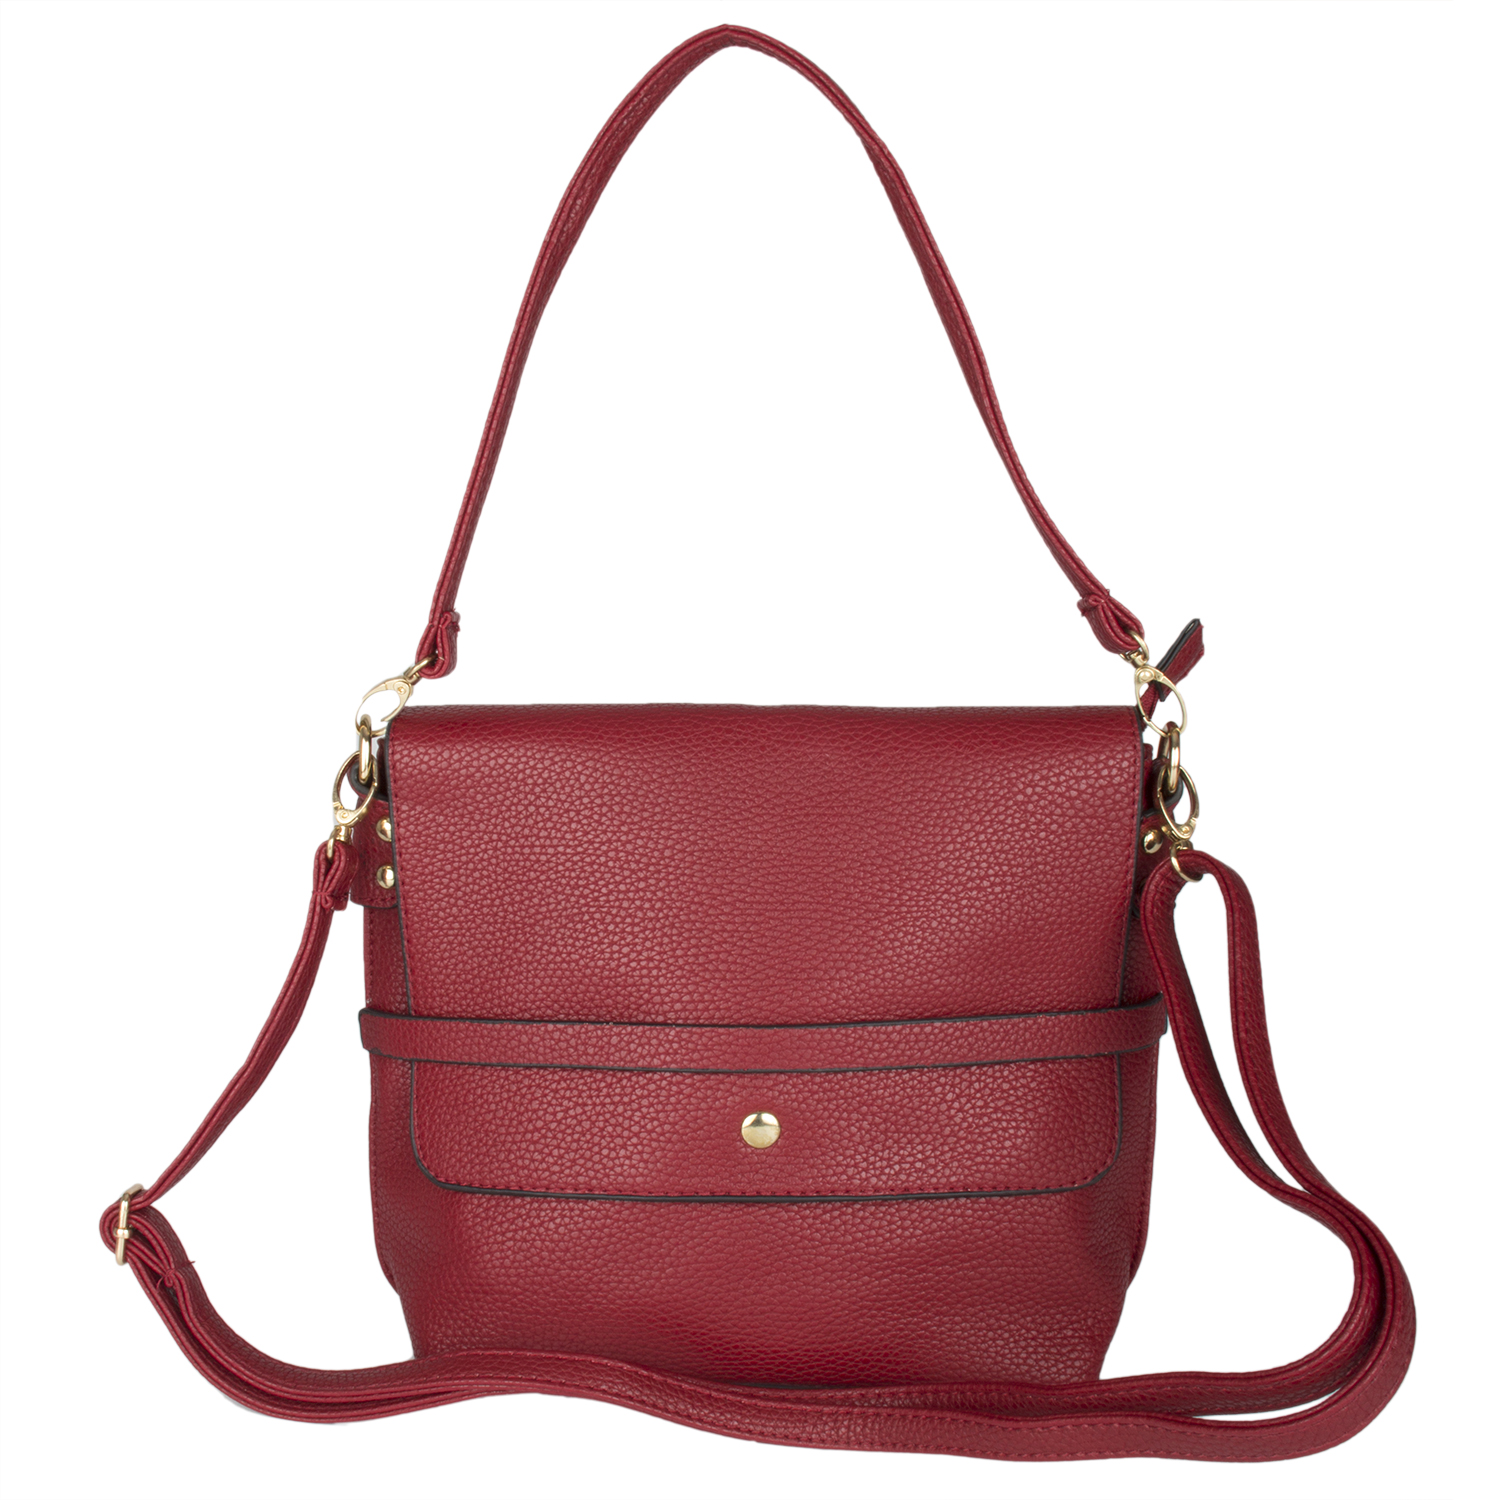 beautiful red purse